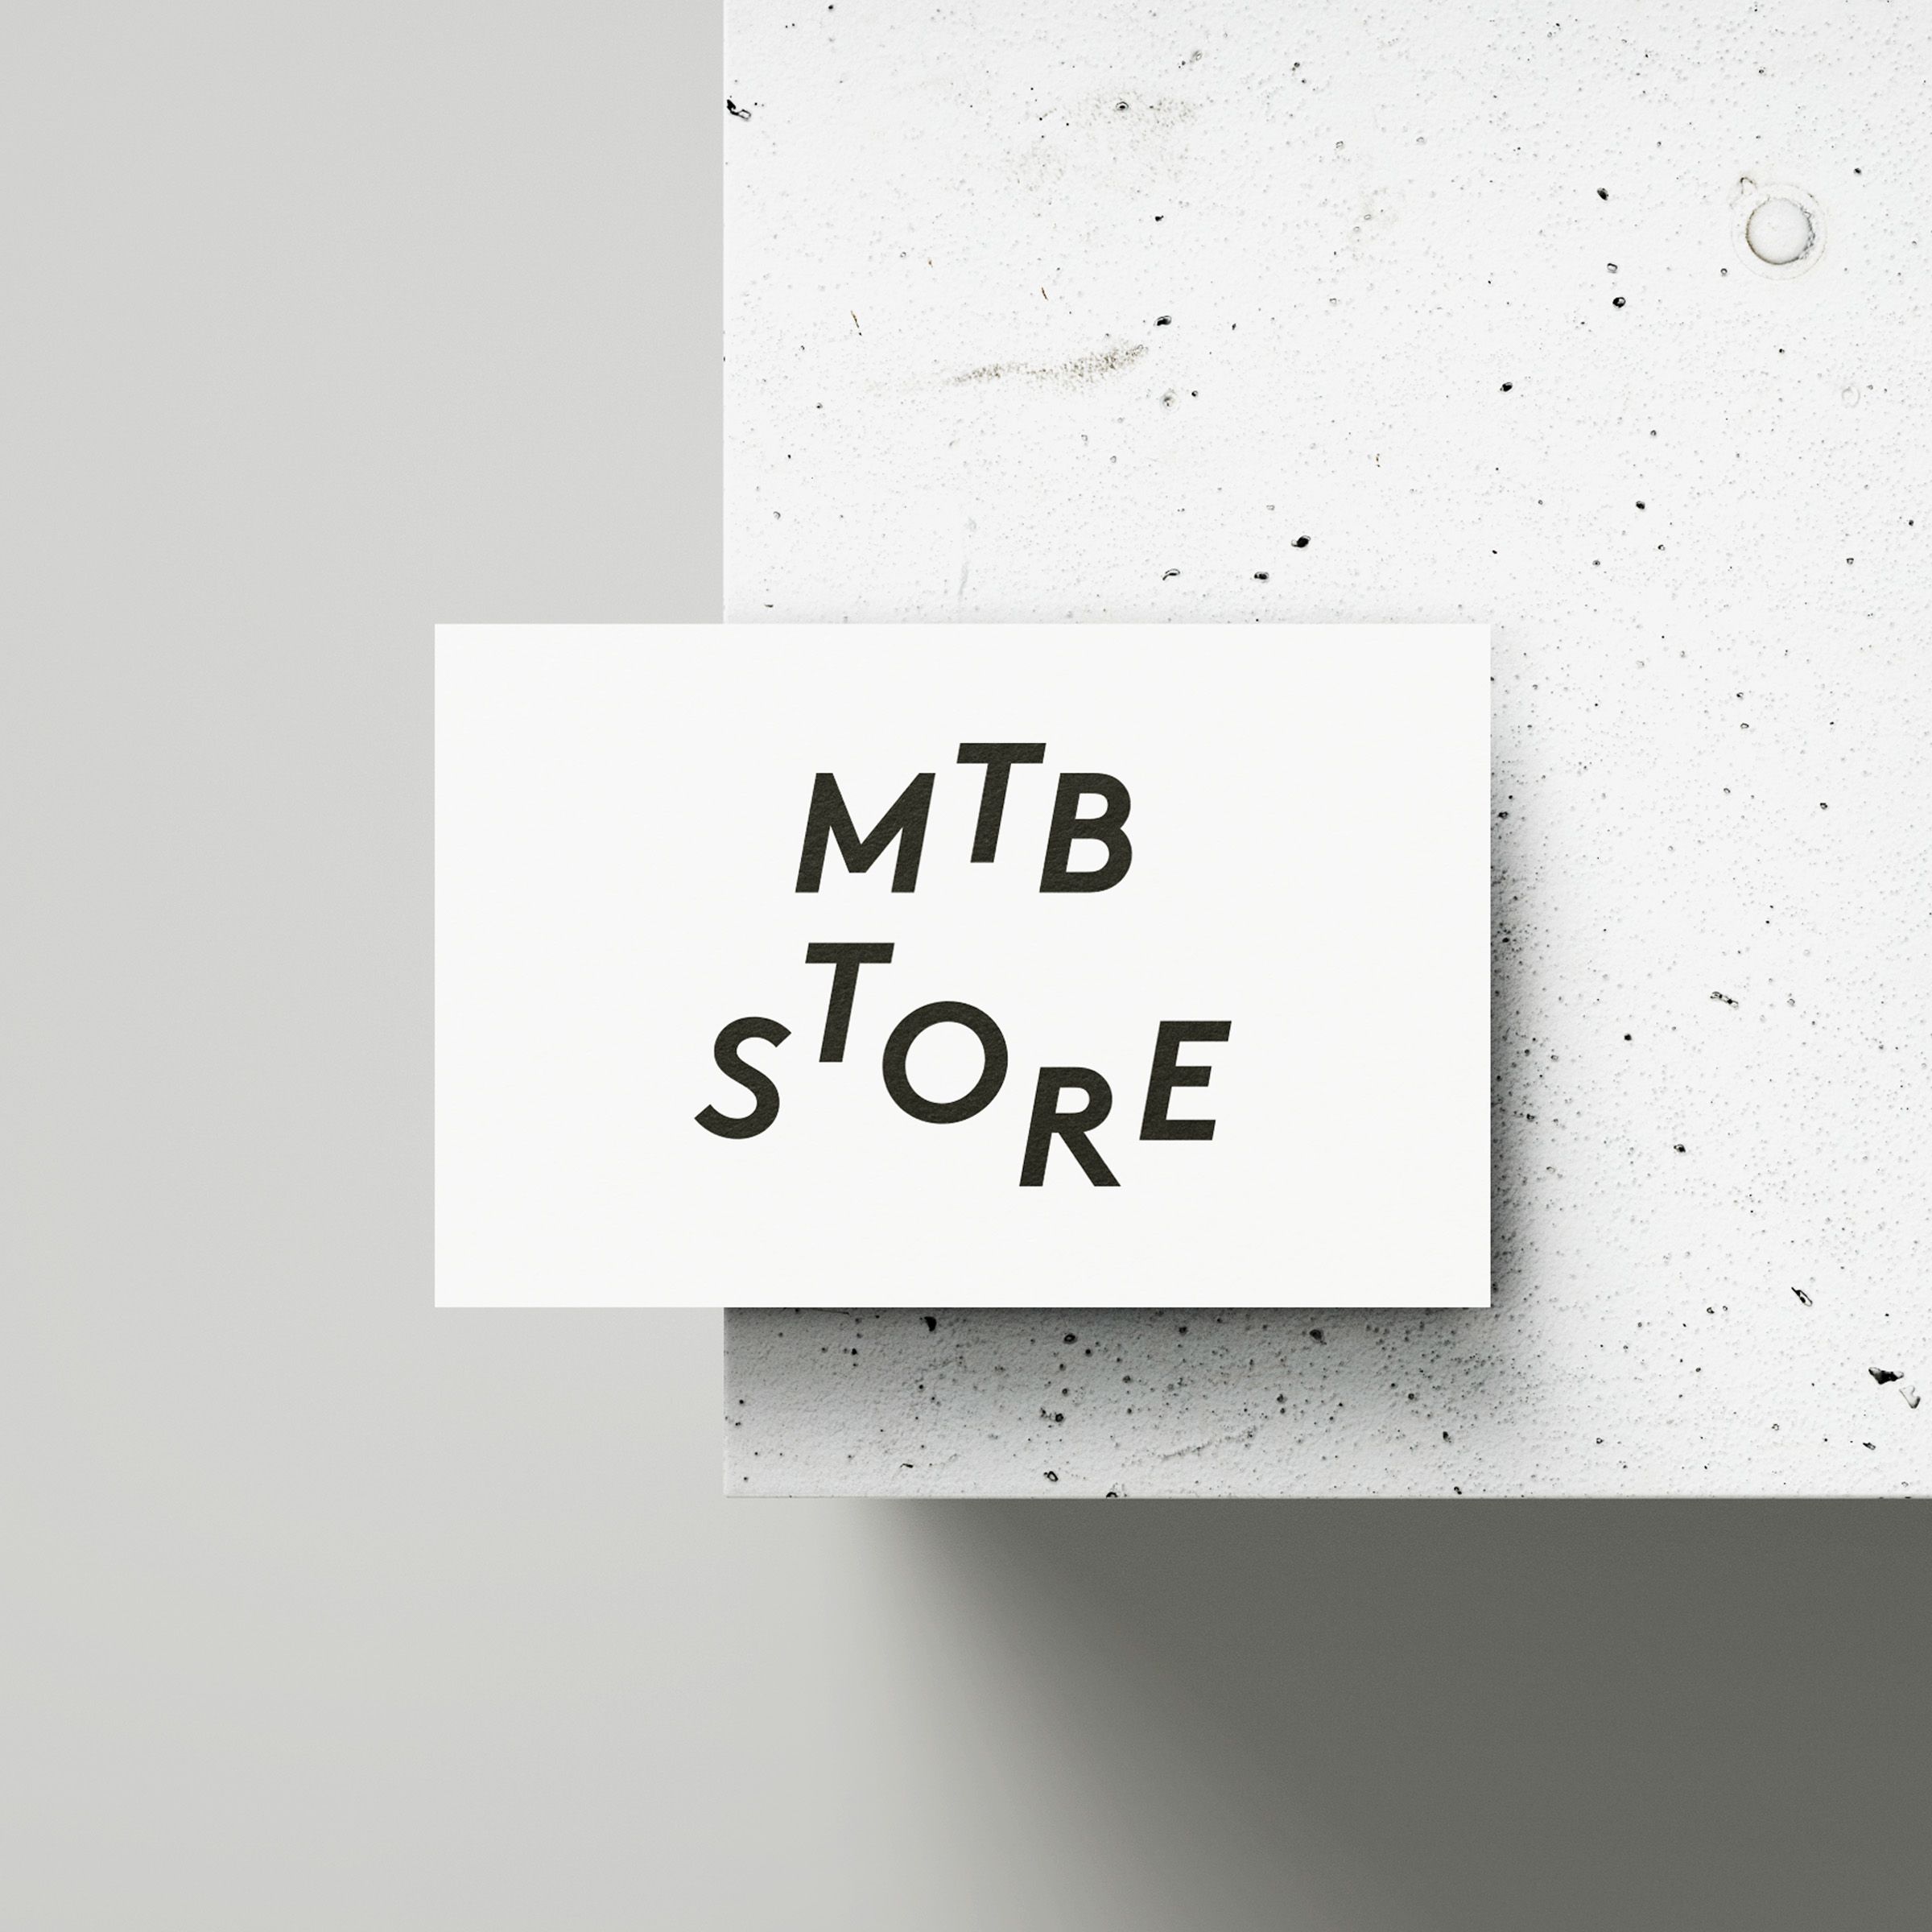 MTB Store